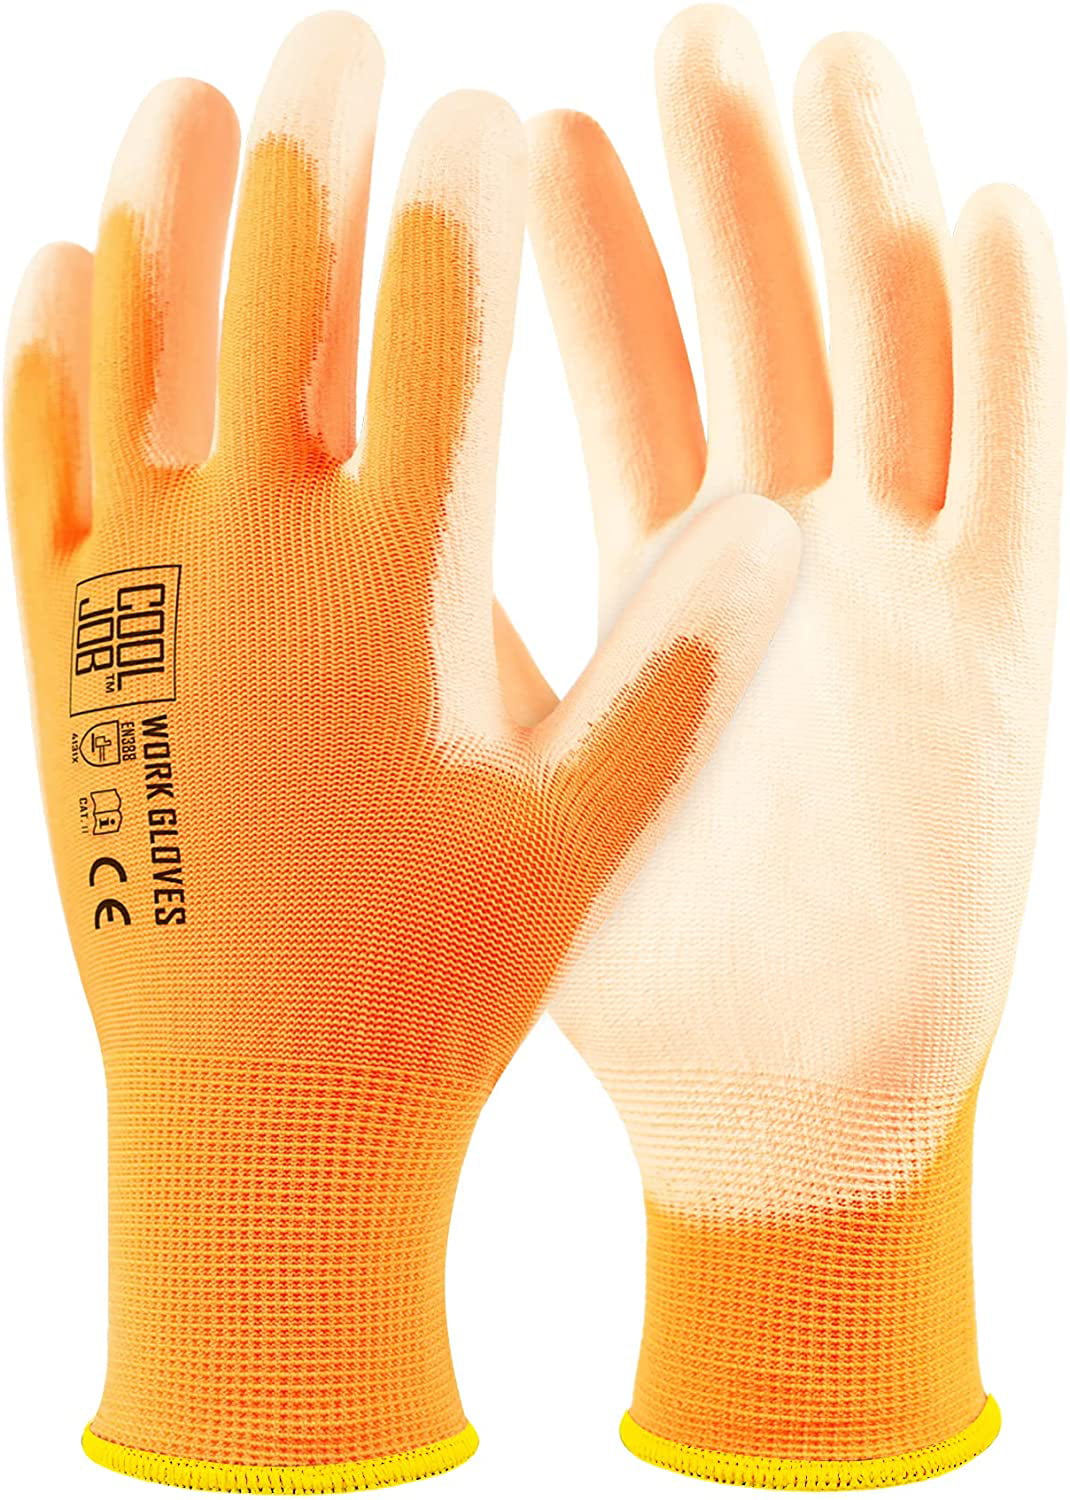 Safety Work Gloves Latex Coated Orange Rubber Heavy Duty Mens Builders Gardening 